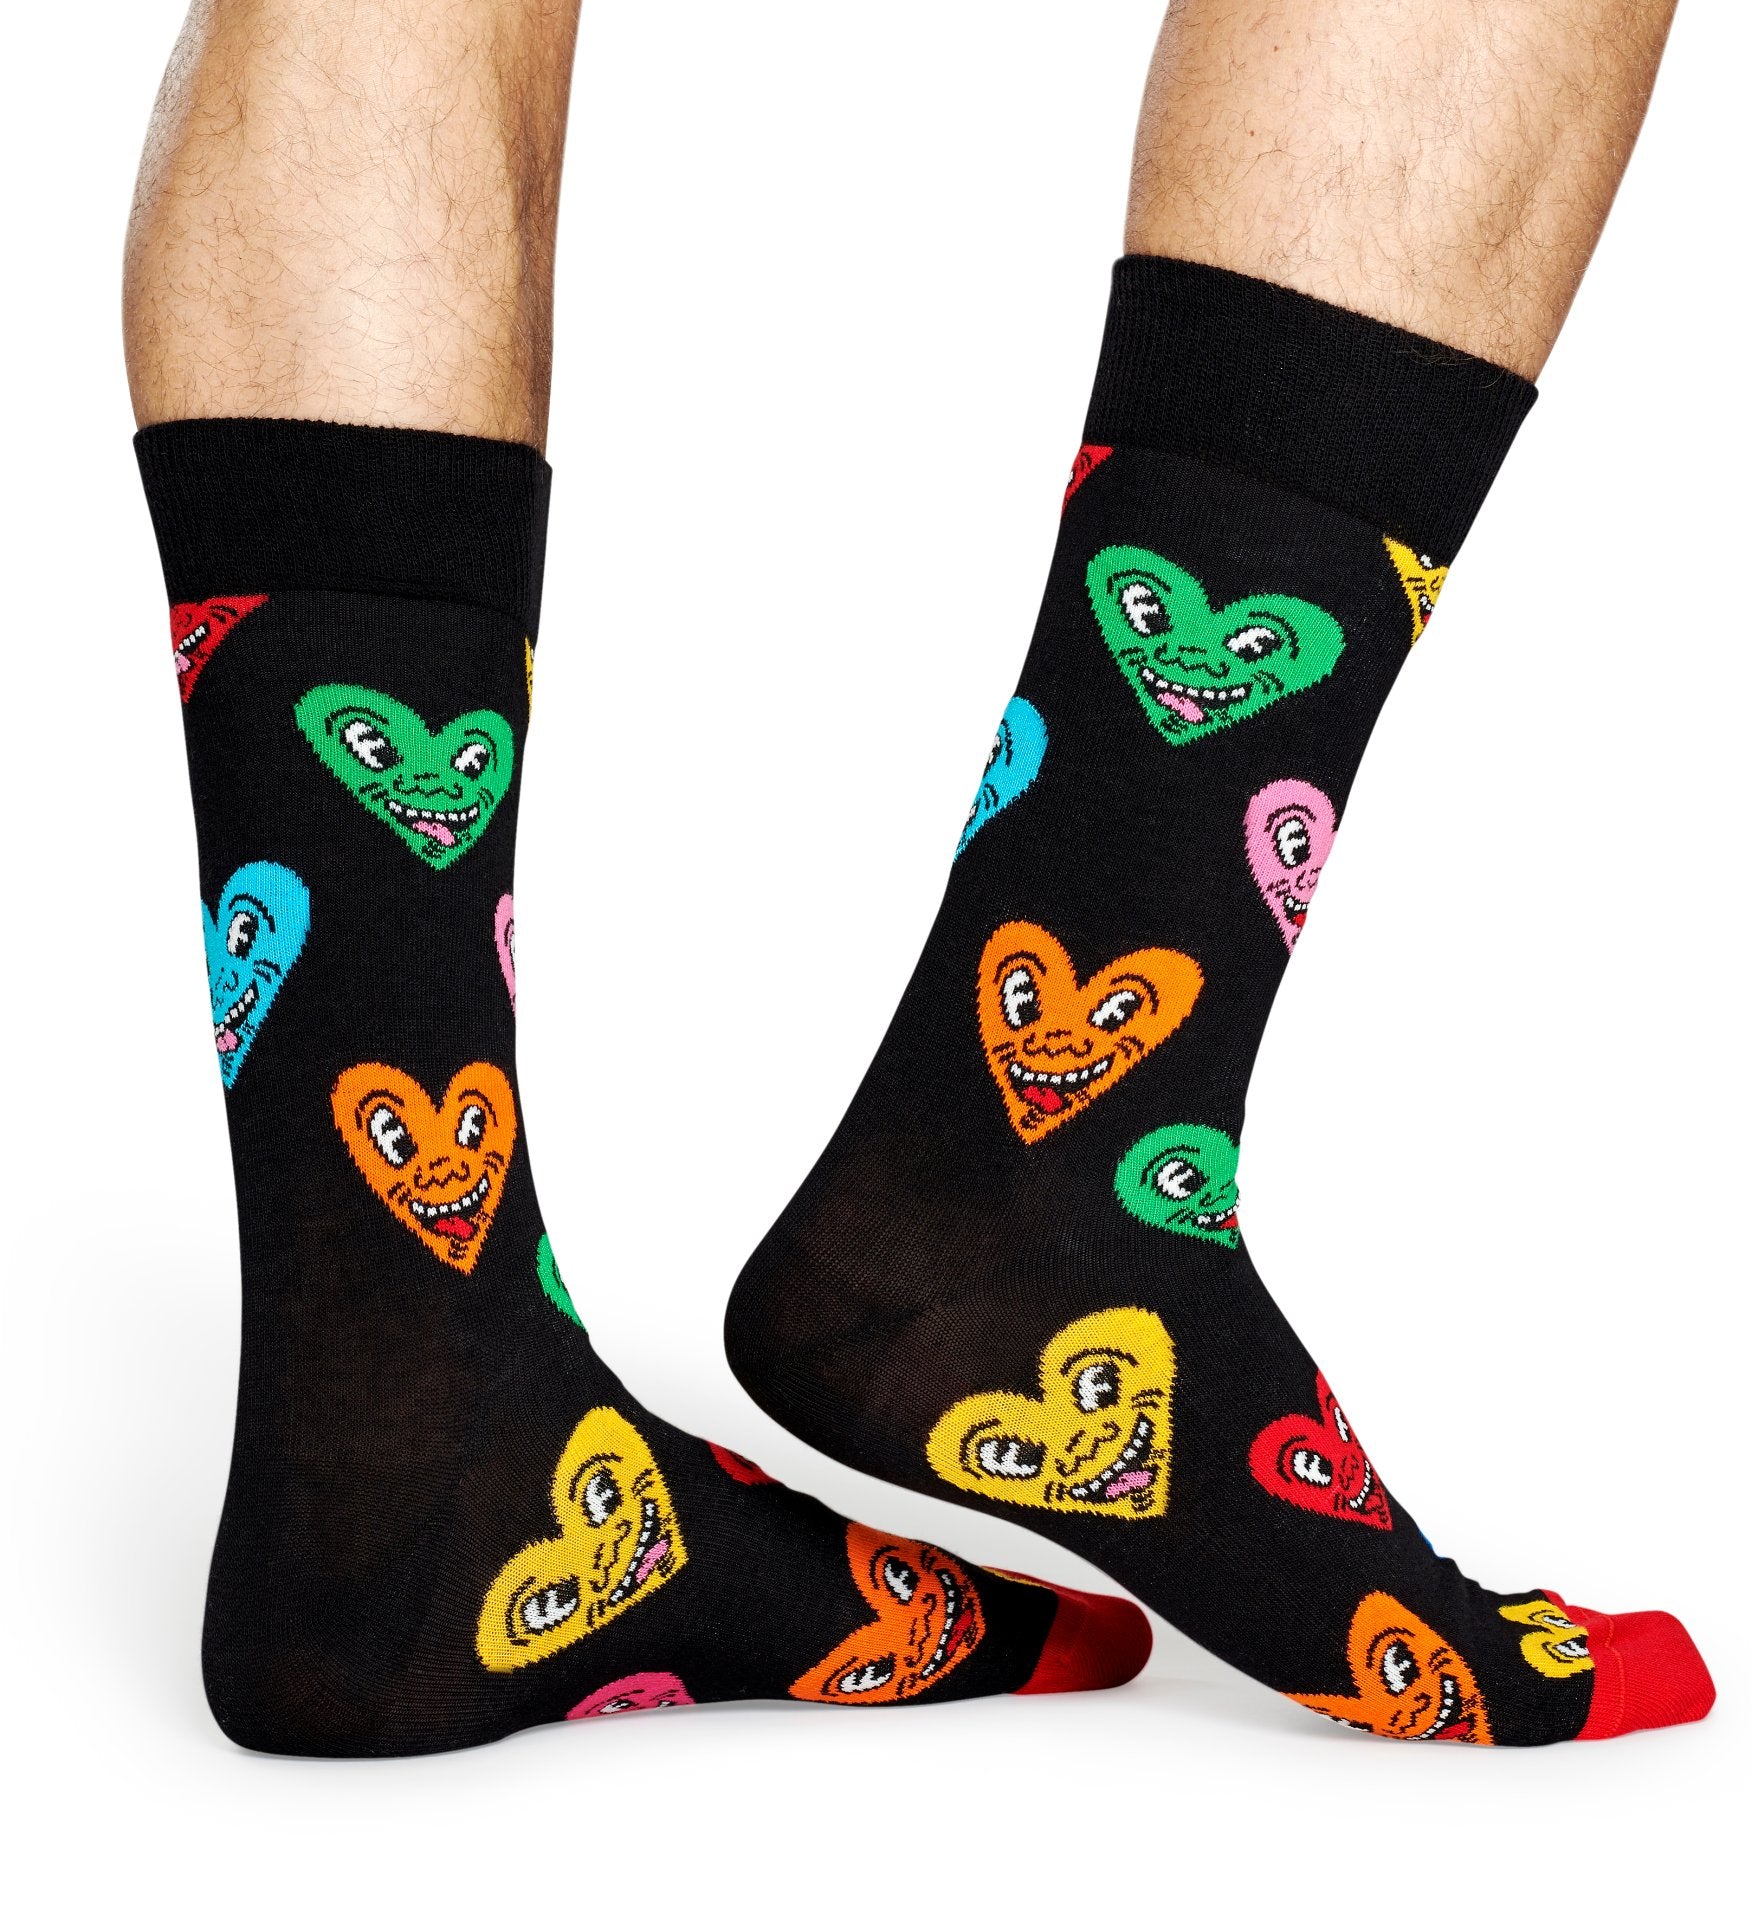 Černé ponožky z kolekce Happy Socks x Keith Haring, vzor Heart